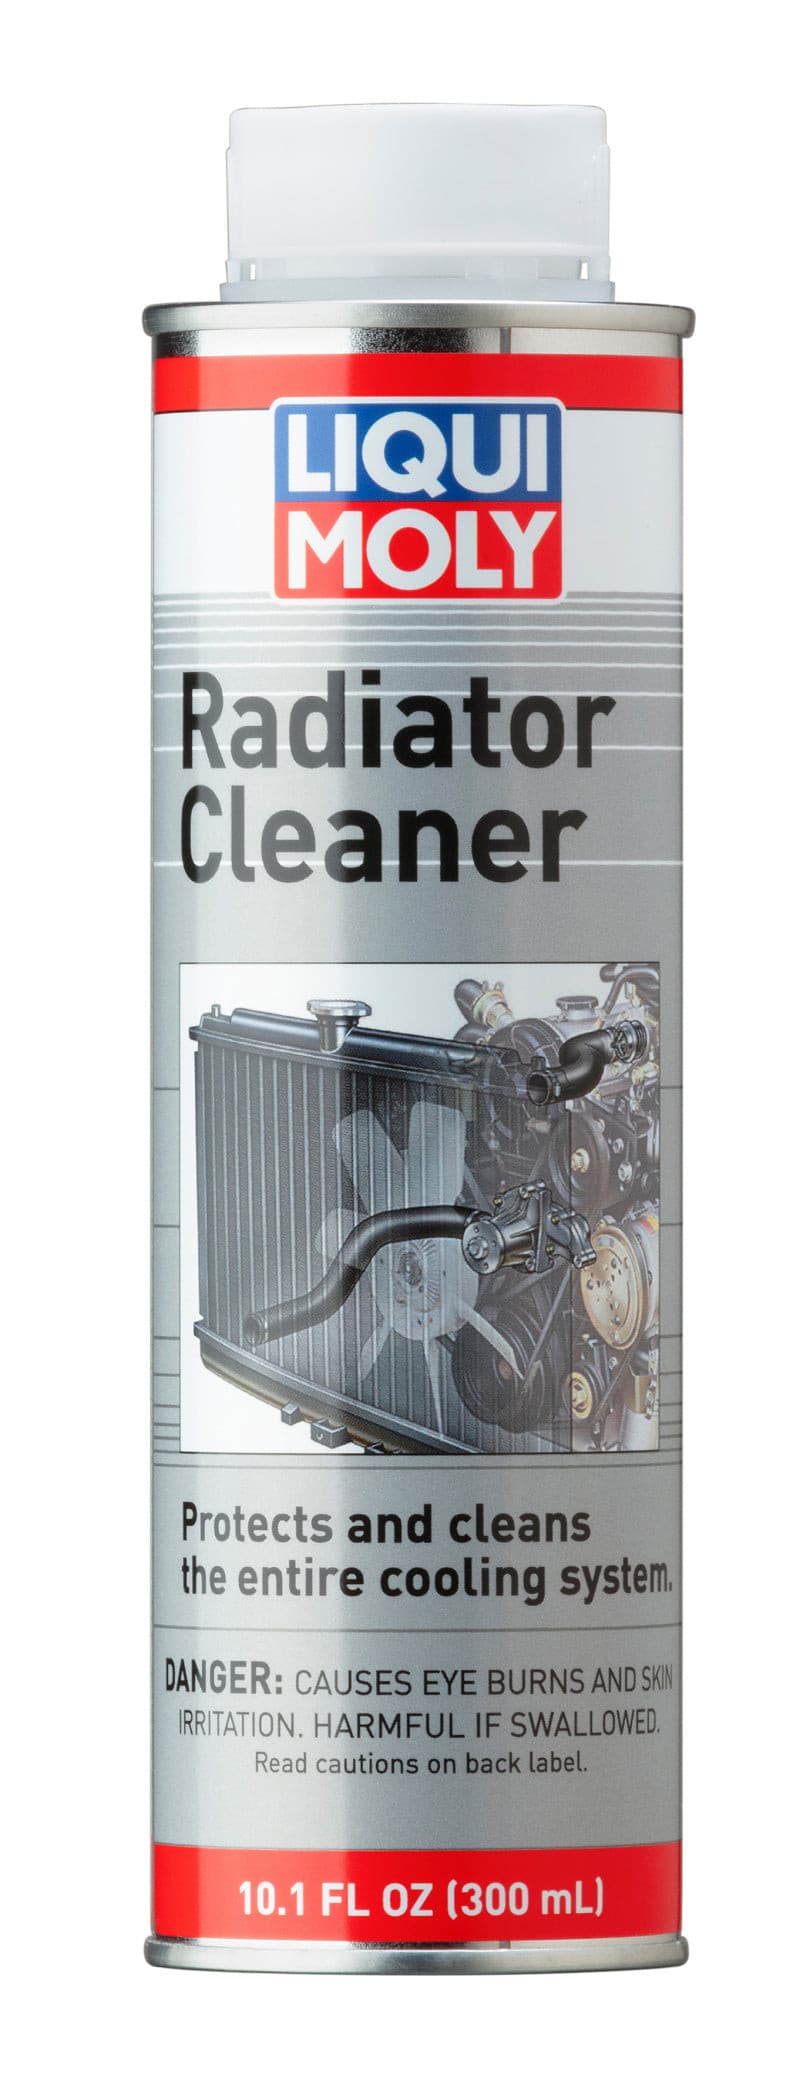 LIQUI MOLY 300mL Radiator Cleaner.